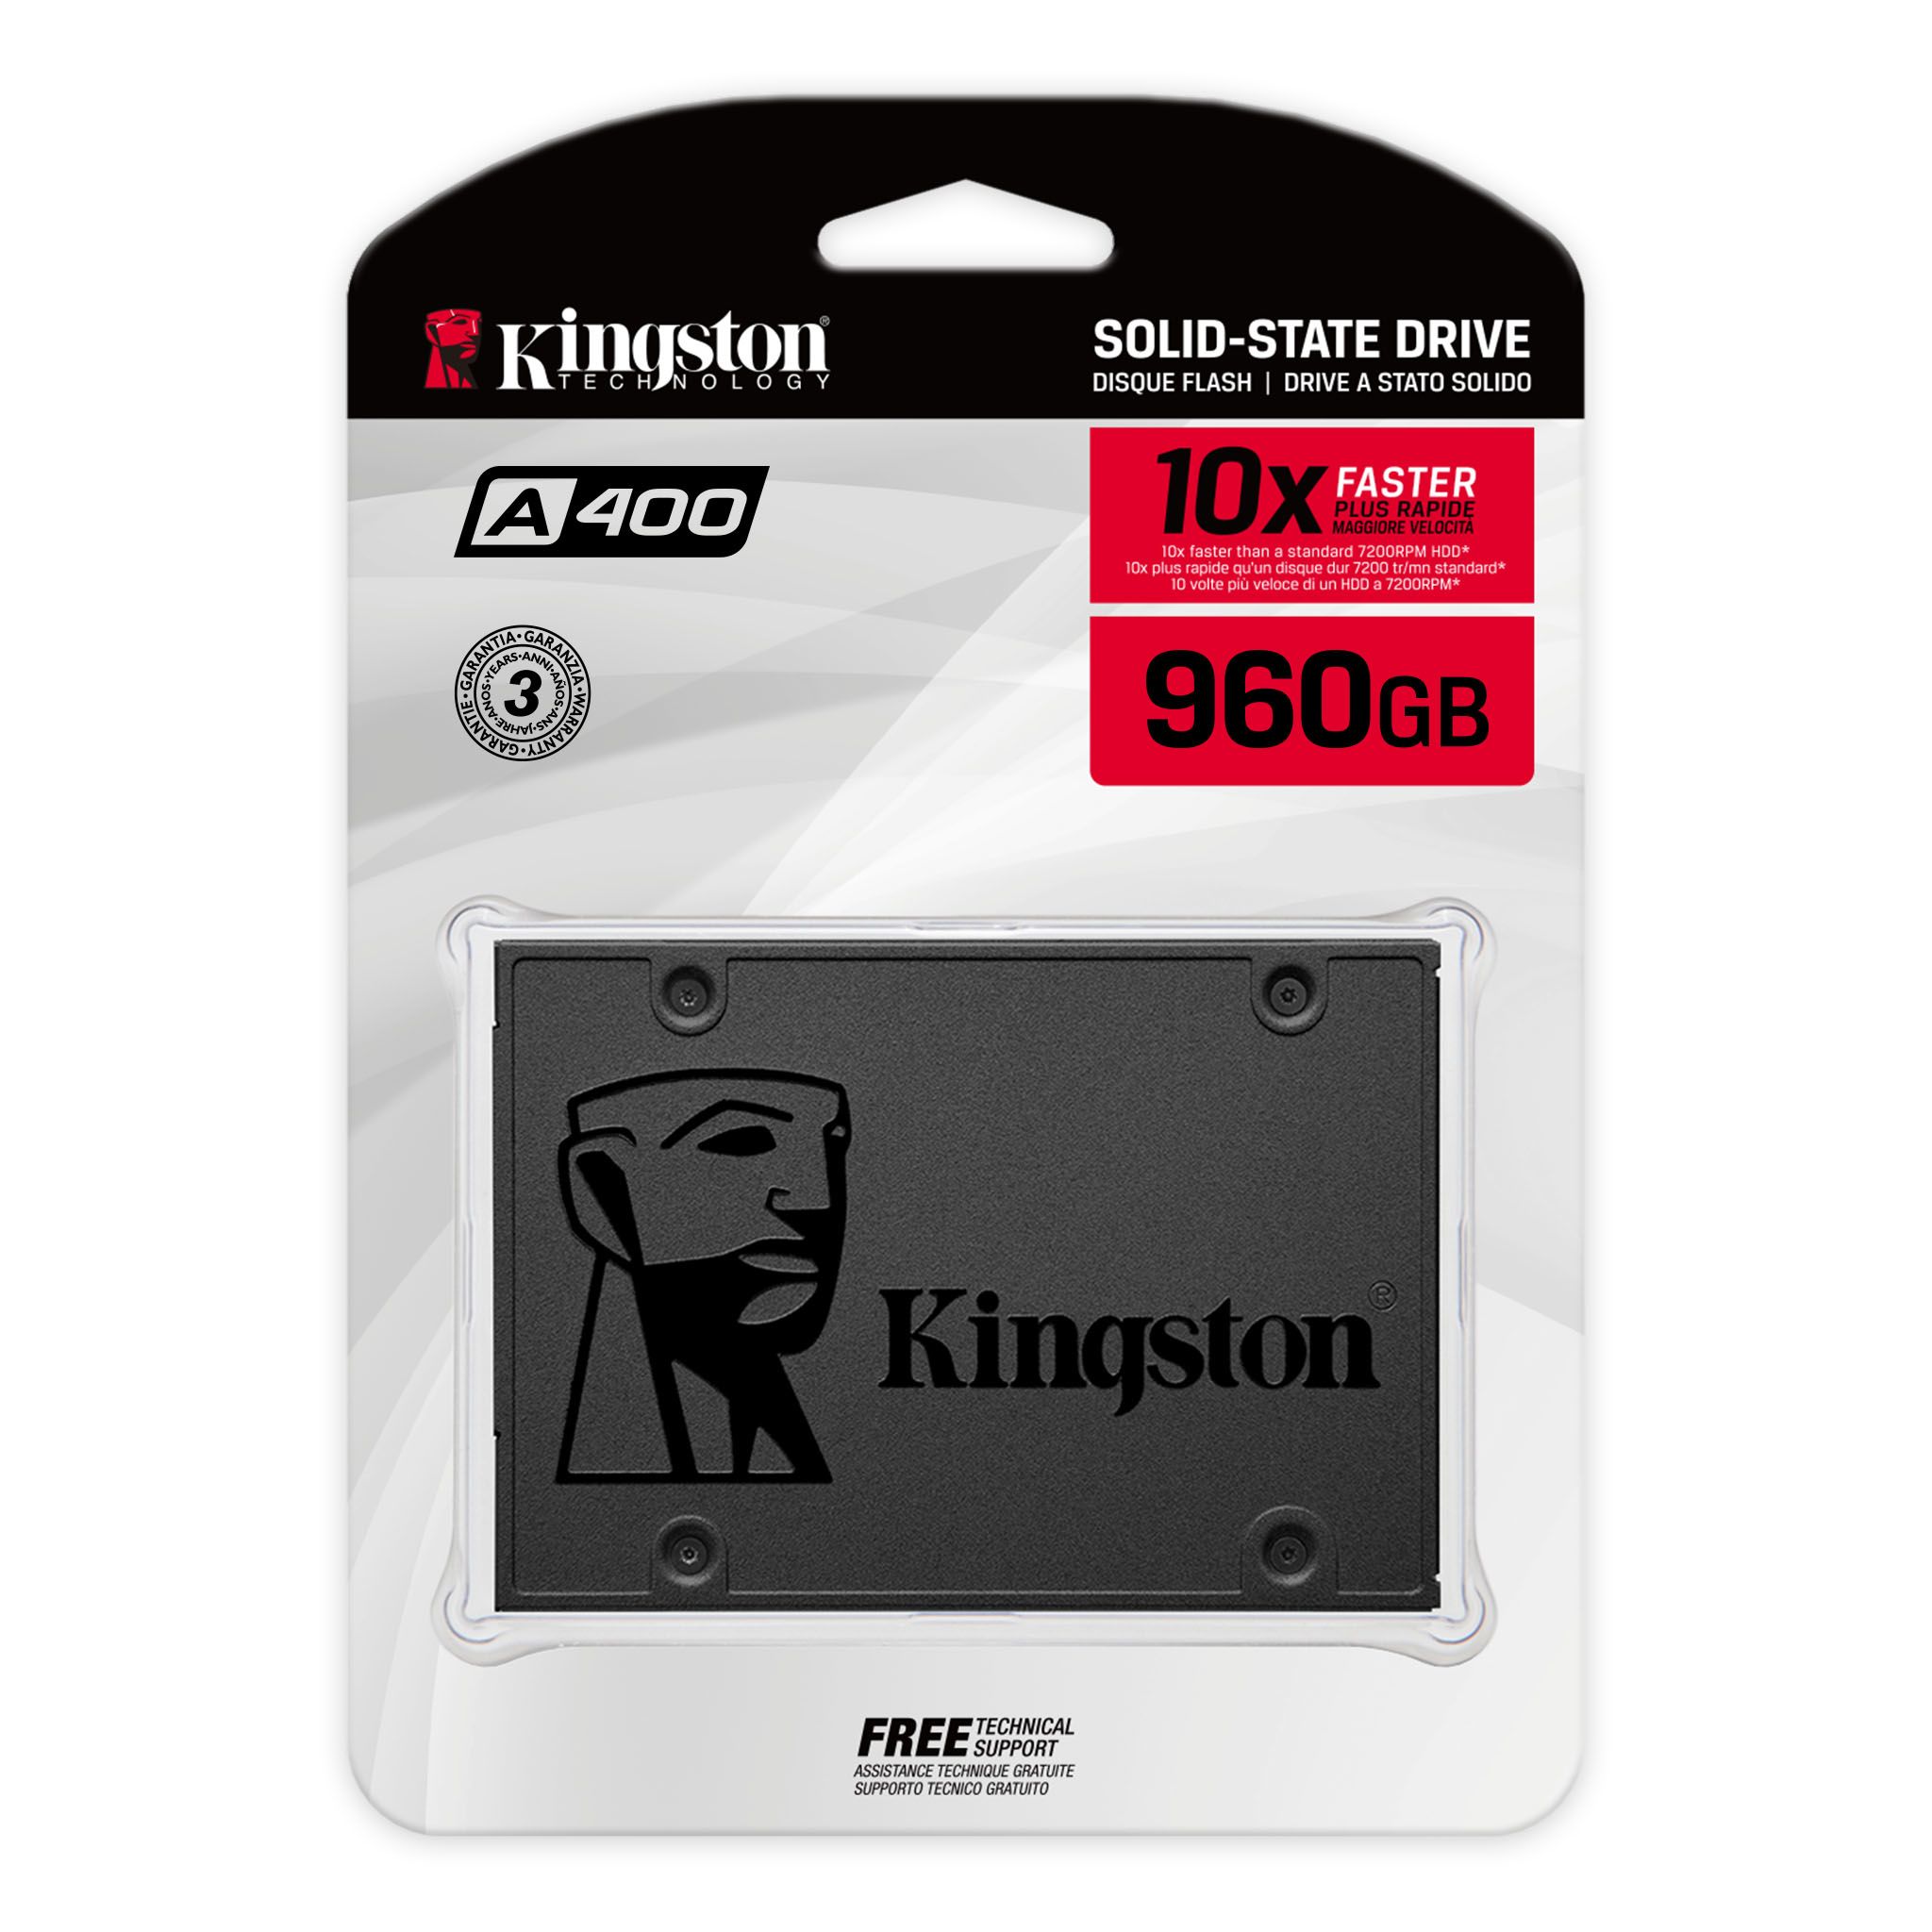 DISCO SSD KINGSTON 2 5 SATA A400 960GB TLC NAND STANDALONE DRIVE  READ 500MB S AND WRITE 450MB S